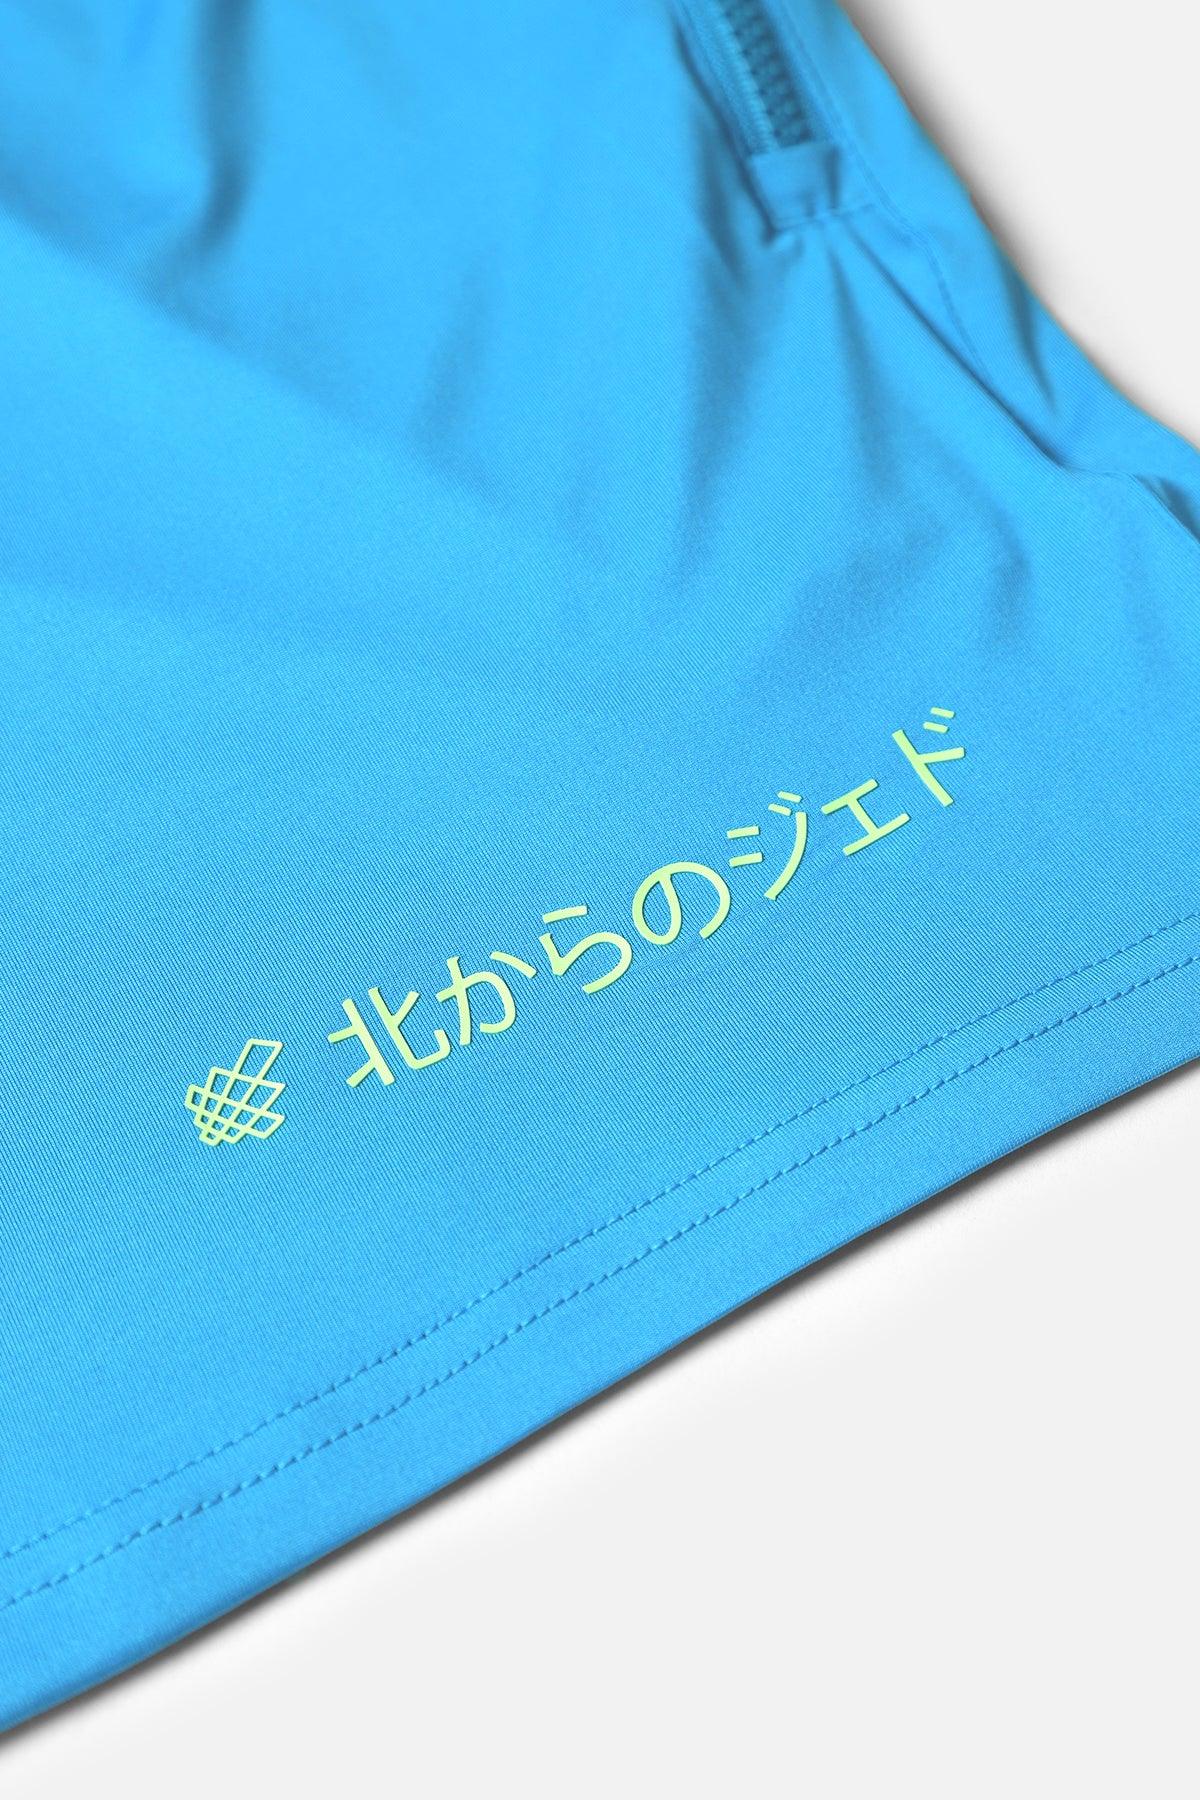 Agile Bodybuilding 4'' Shorts w Zipper Pockets - Japanese Blue - Jed North